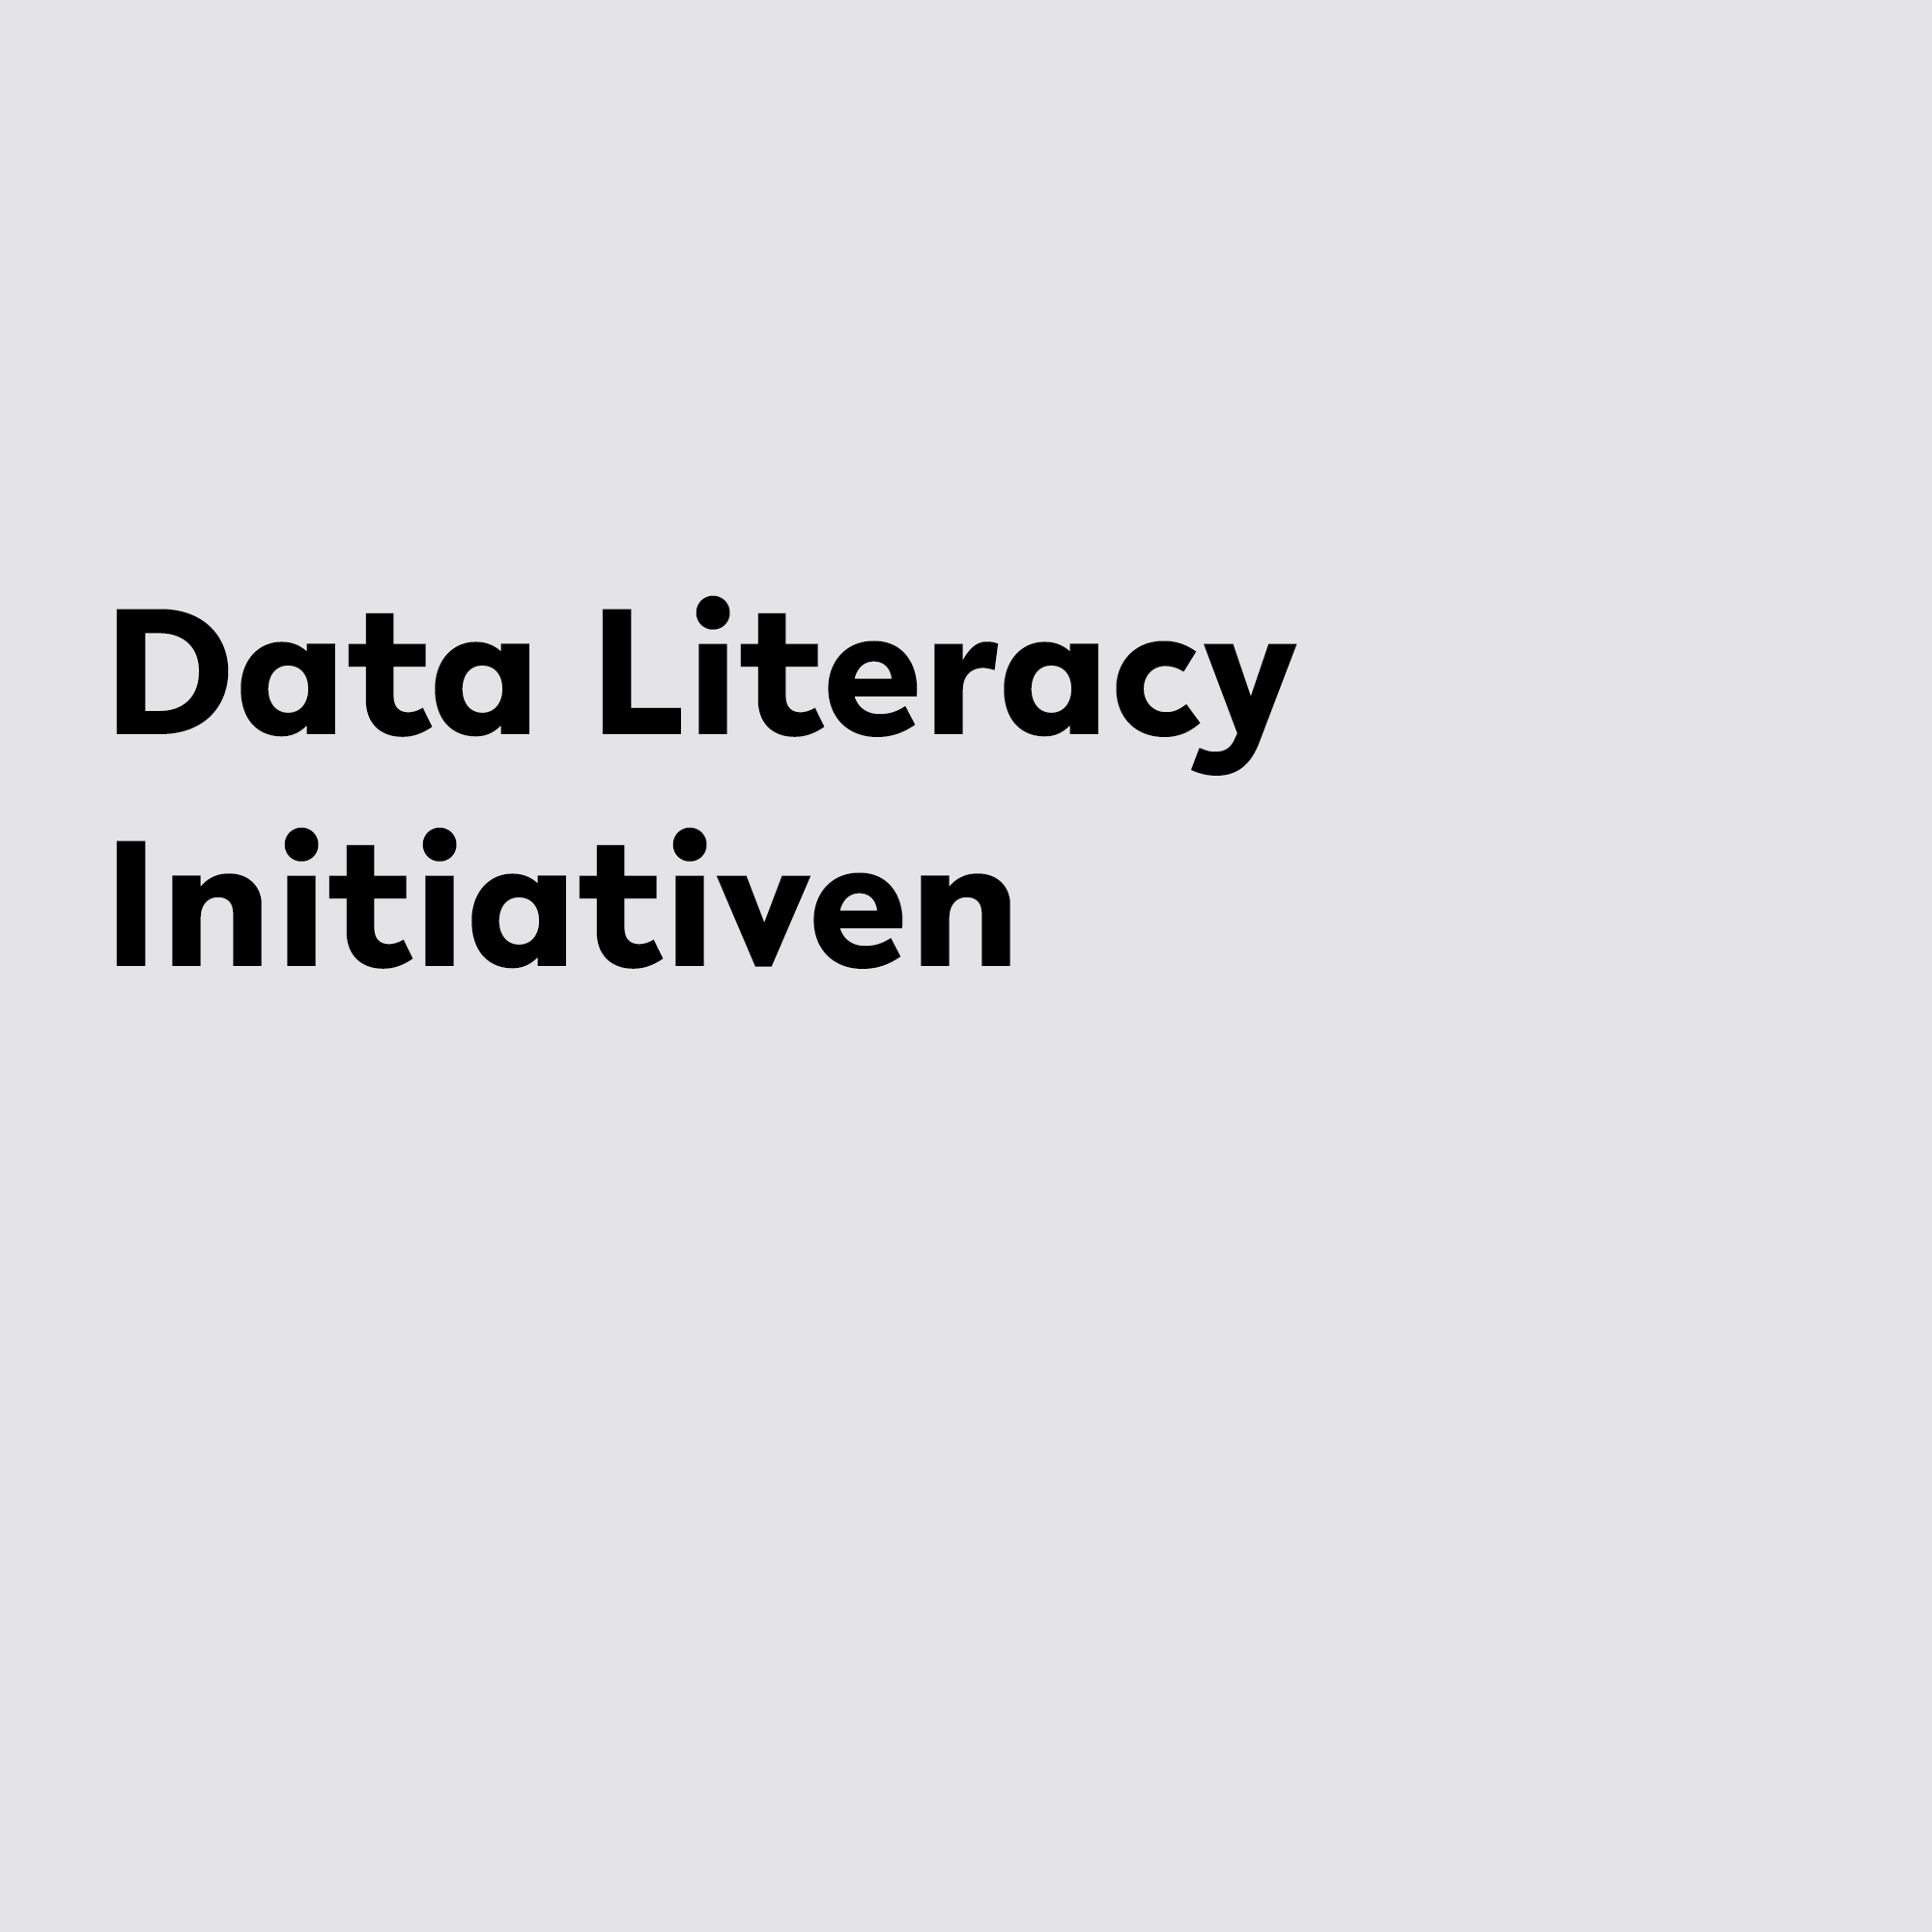 Data Literacy Initiativen